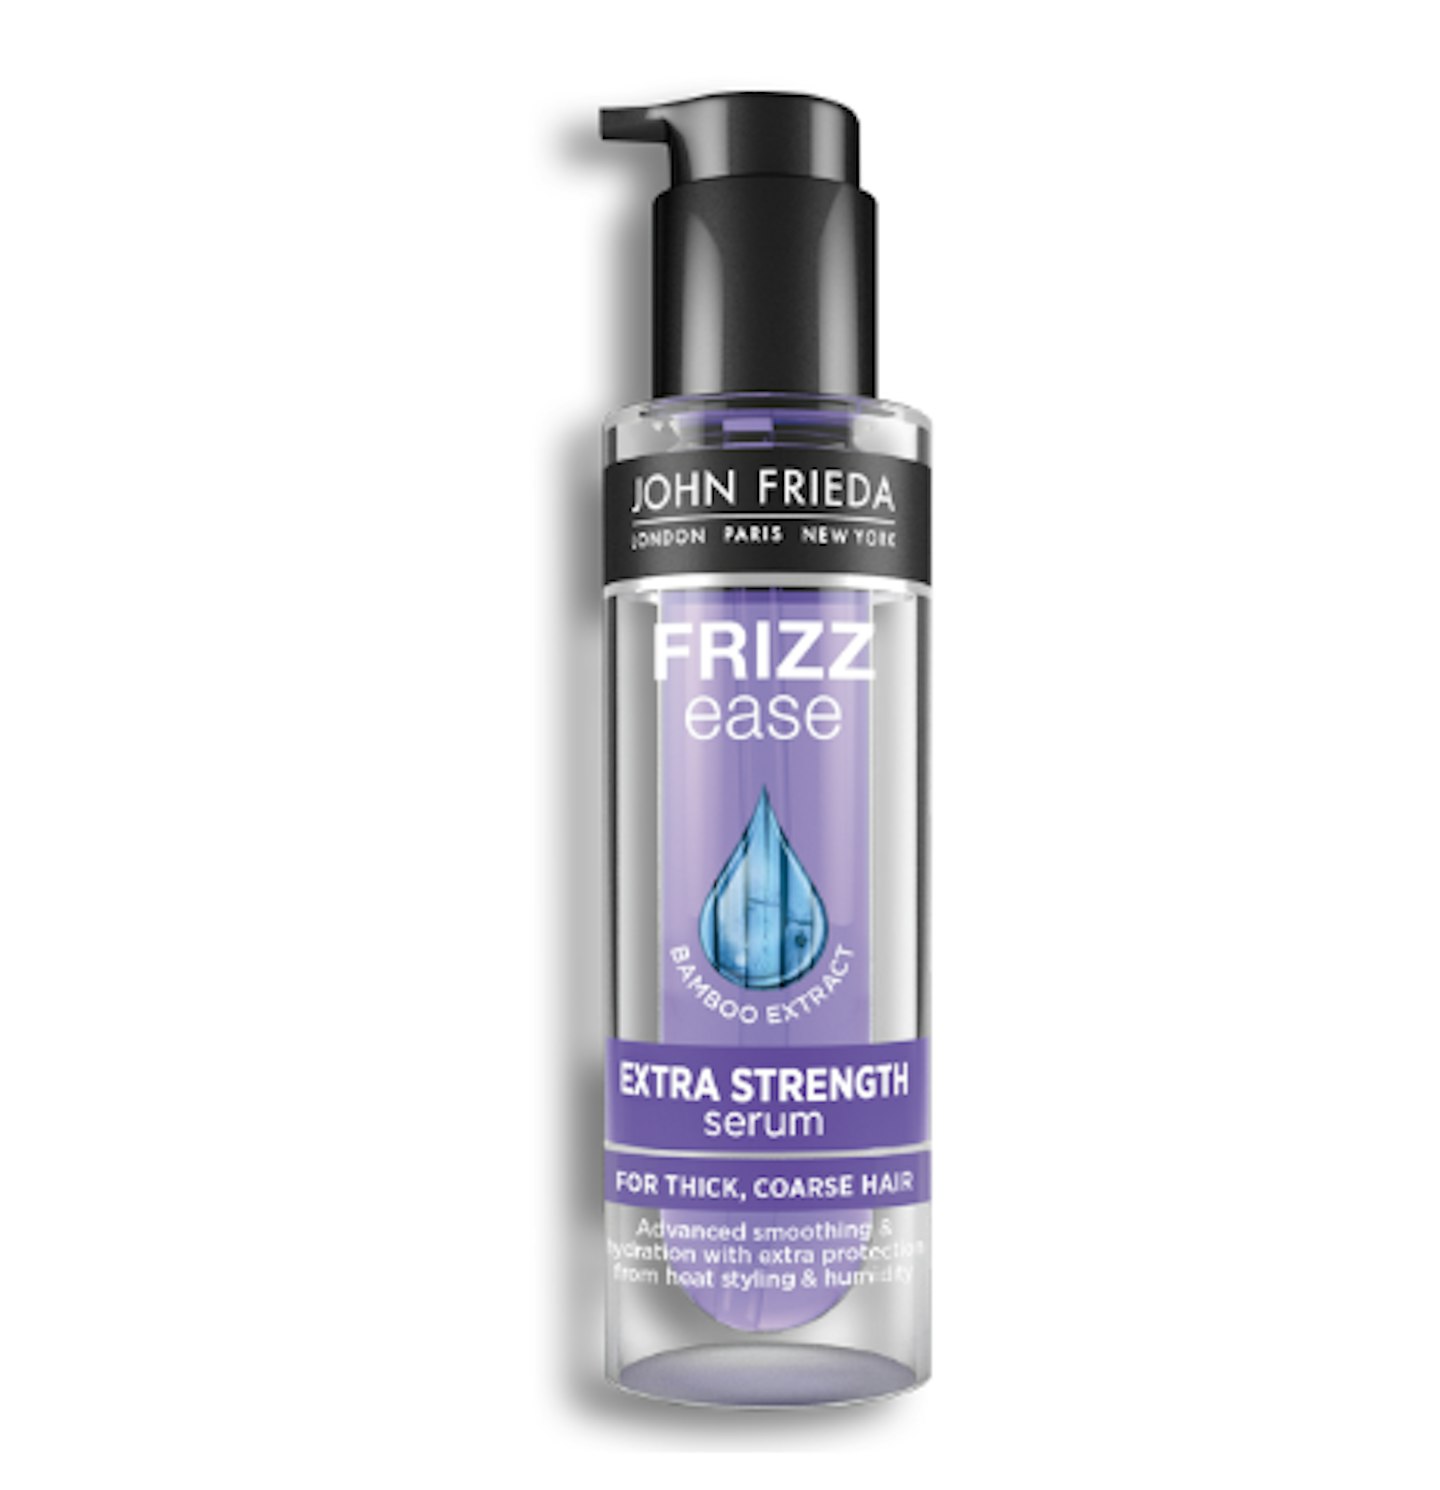 Zara McDermott favourite John Frieda Frizz Ease serum